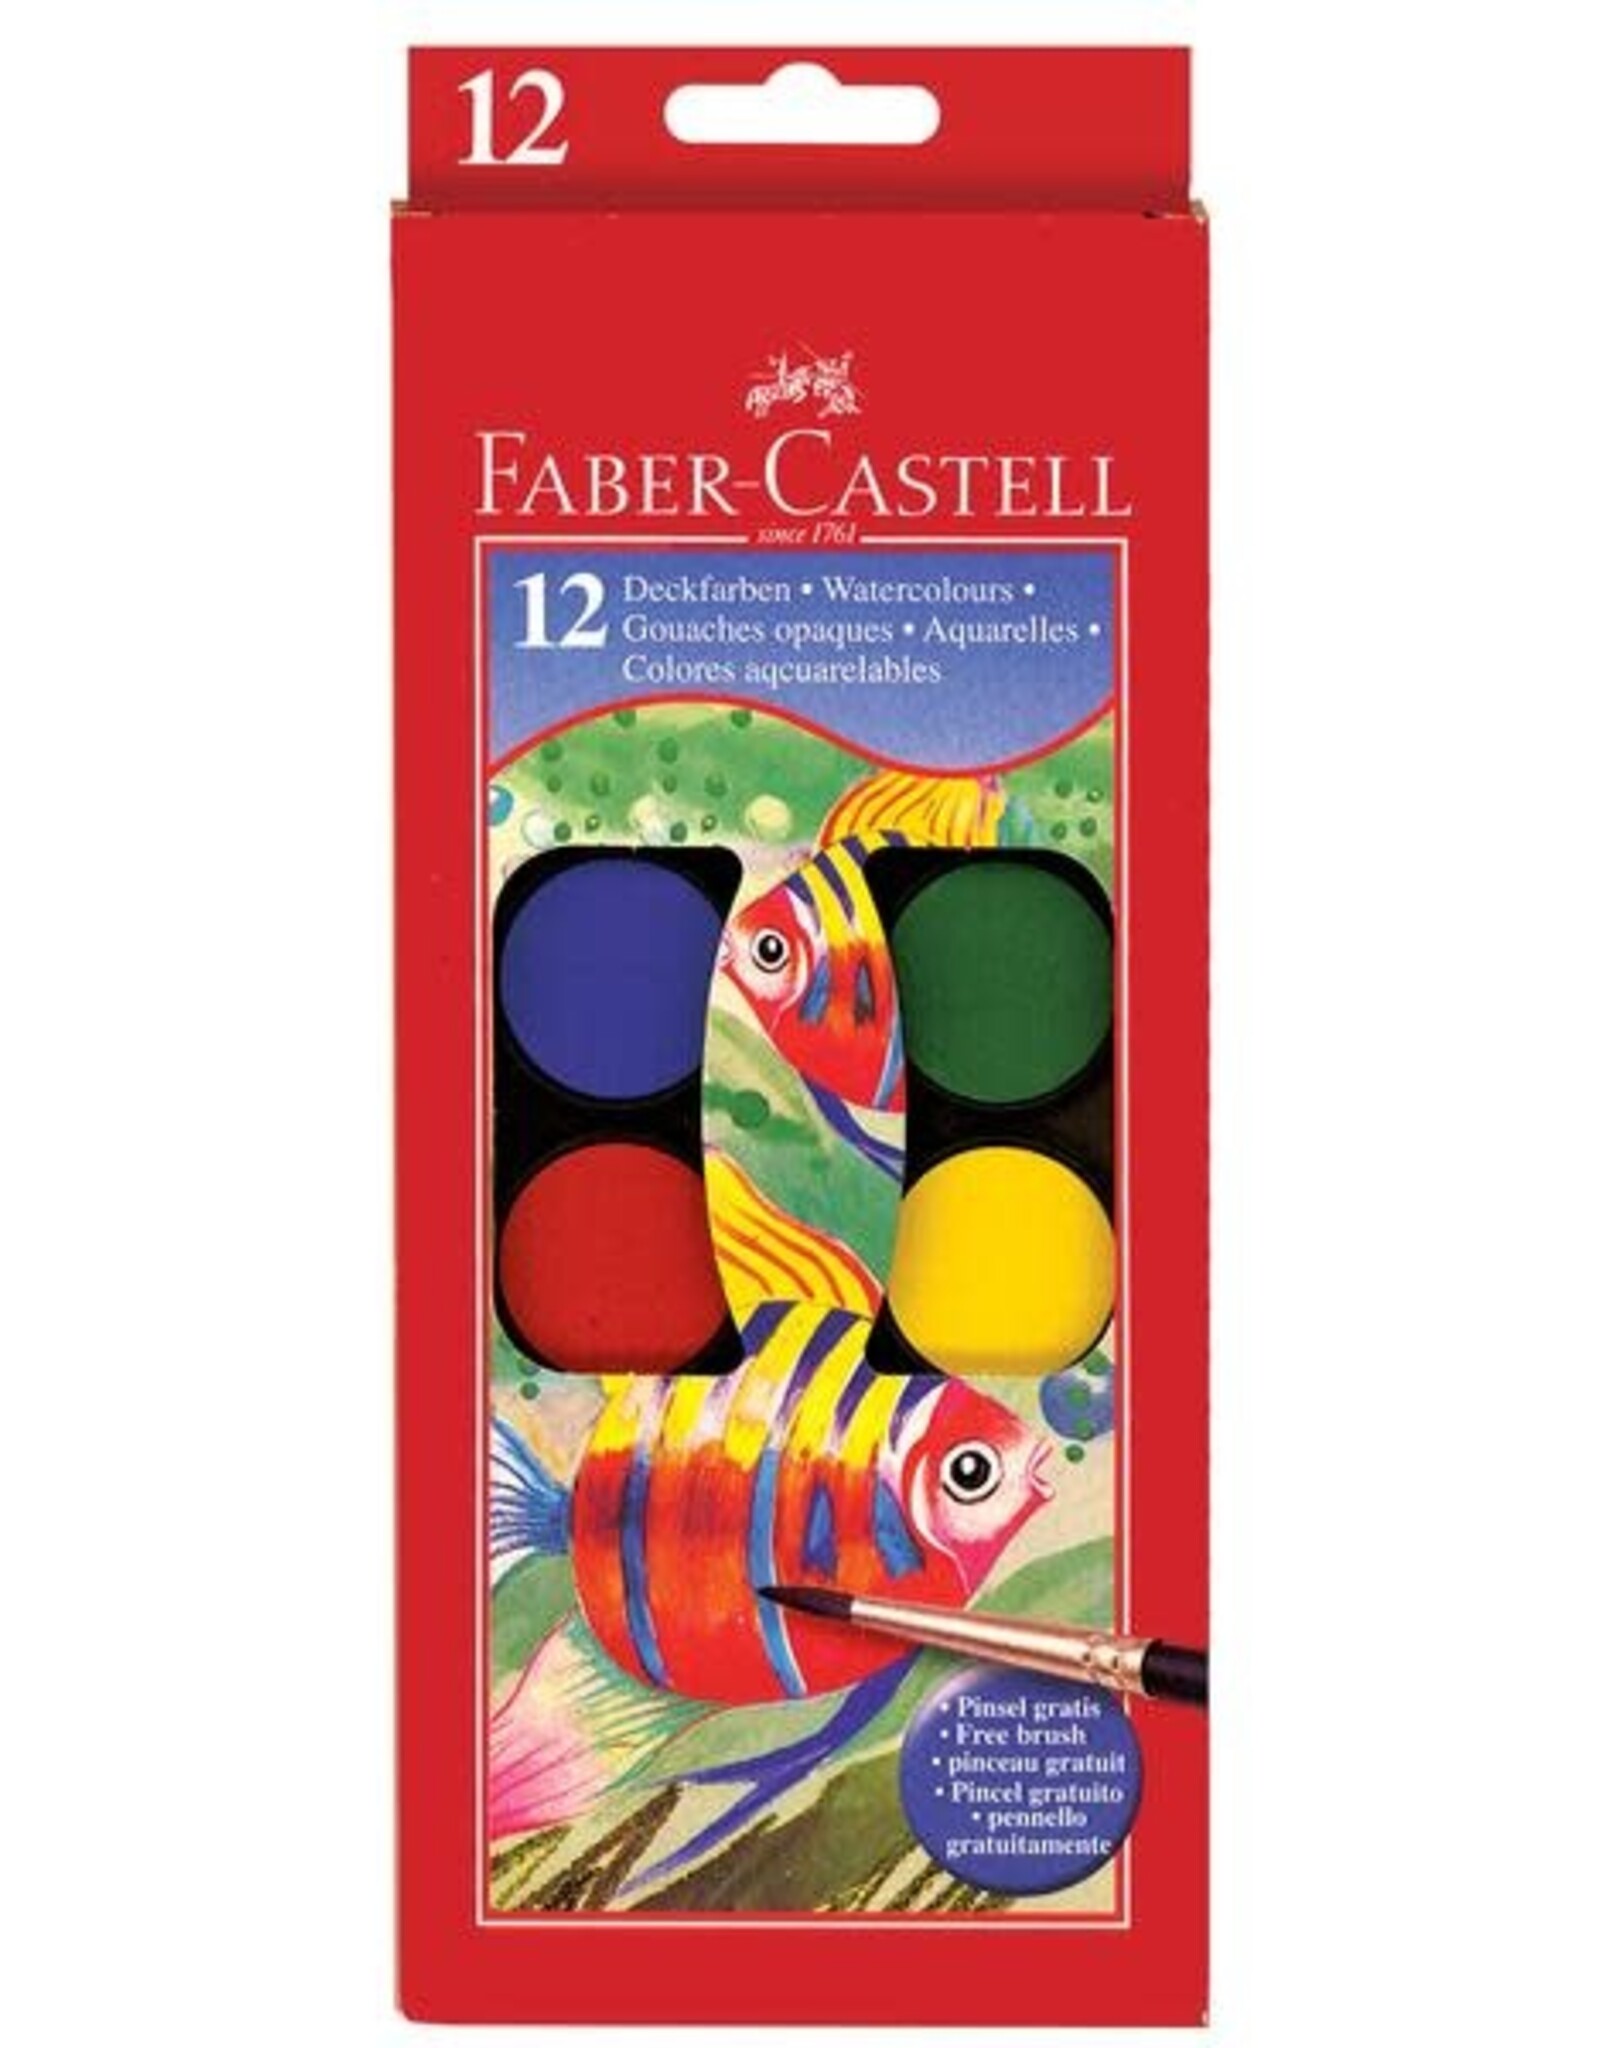 Faber Castell 12ct Watercolor Paint Set (cakes)